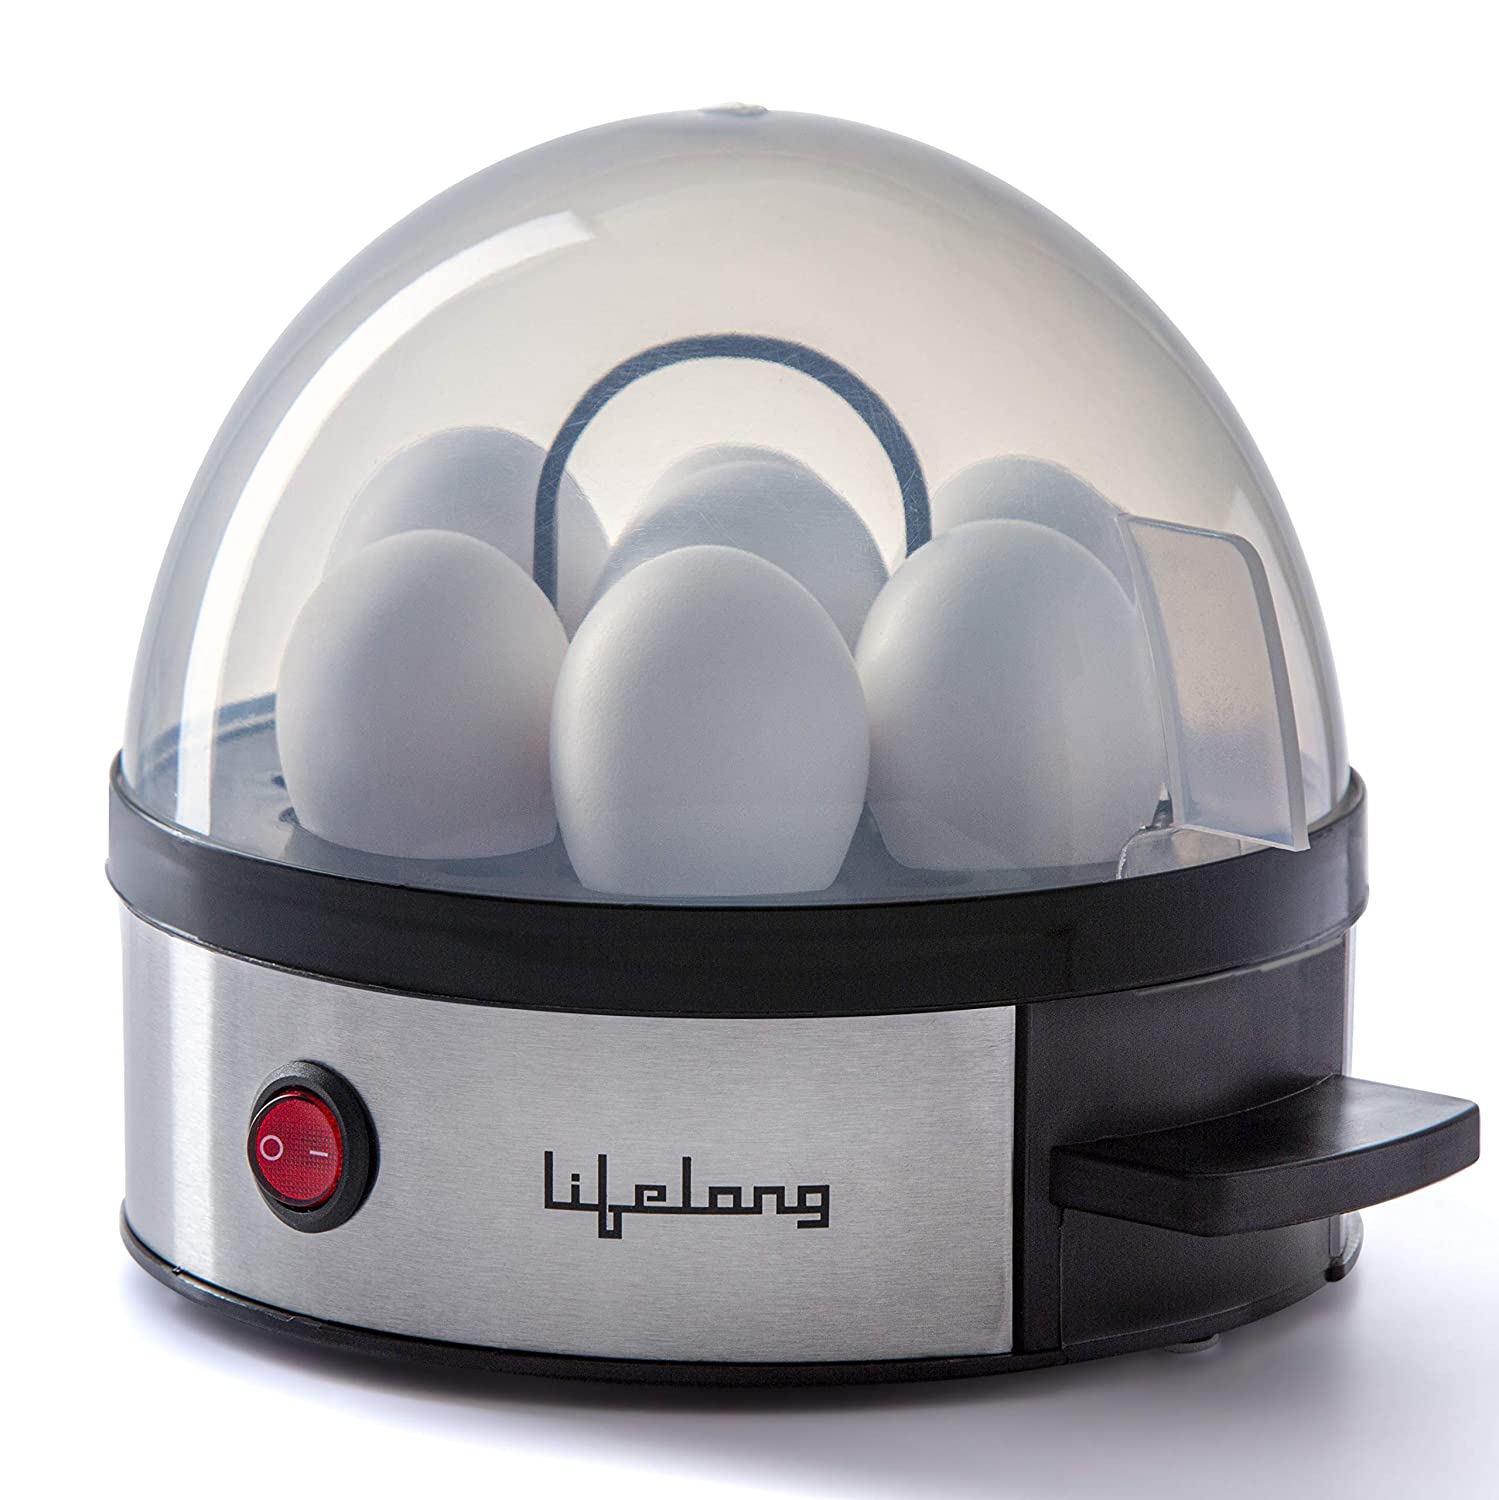  Lifelong Egg Boiler 350W with 7 Egg Capacity